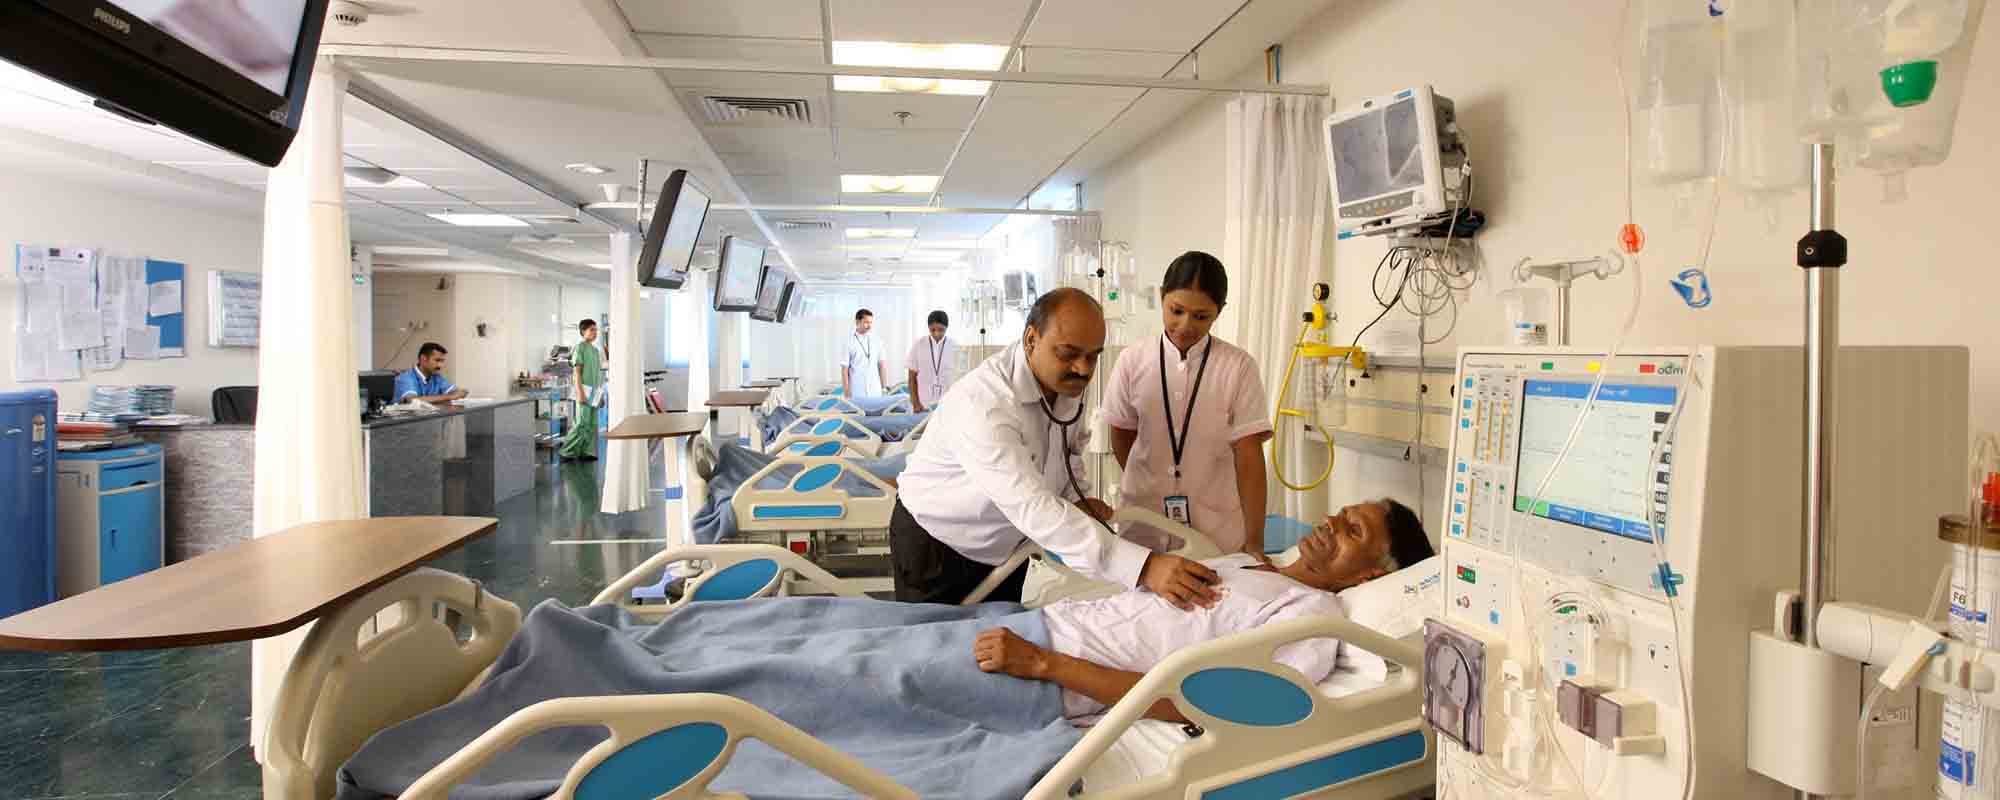 Paramedical Courses